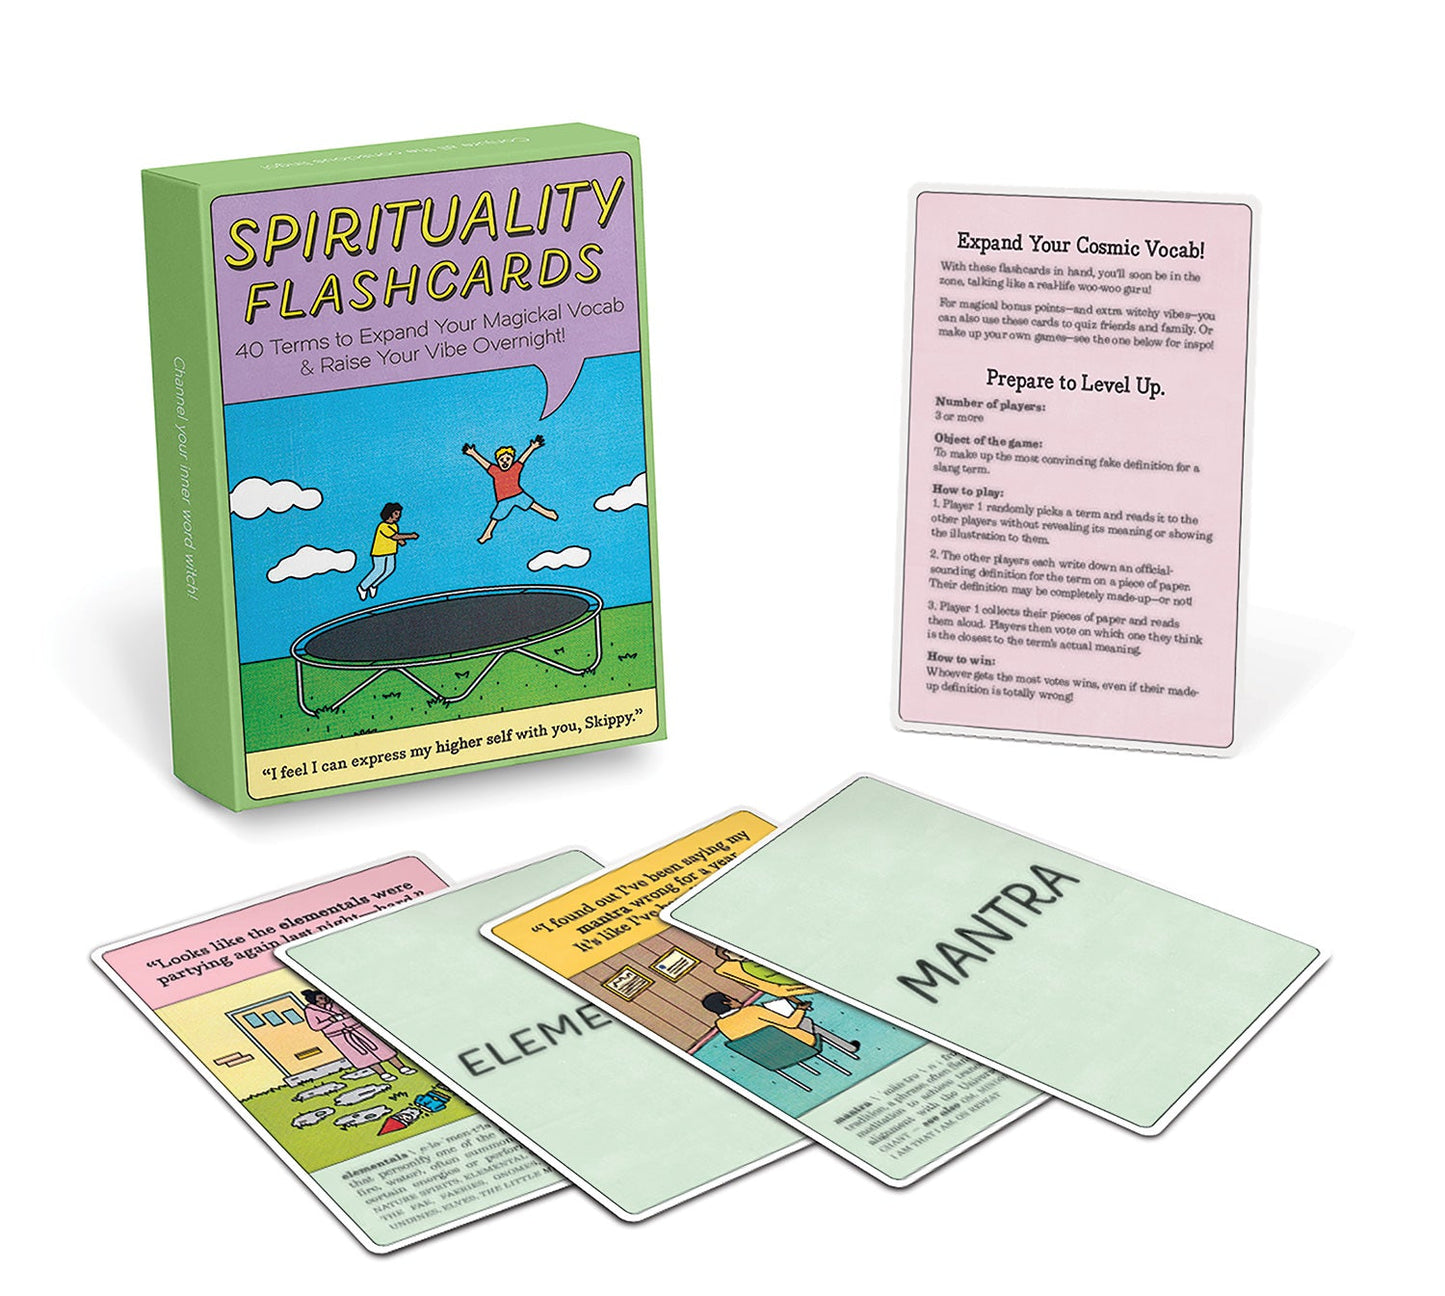 Spirituality Flash Cards